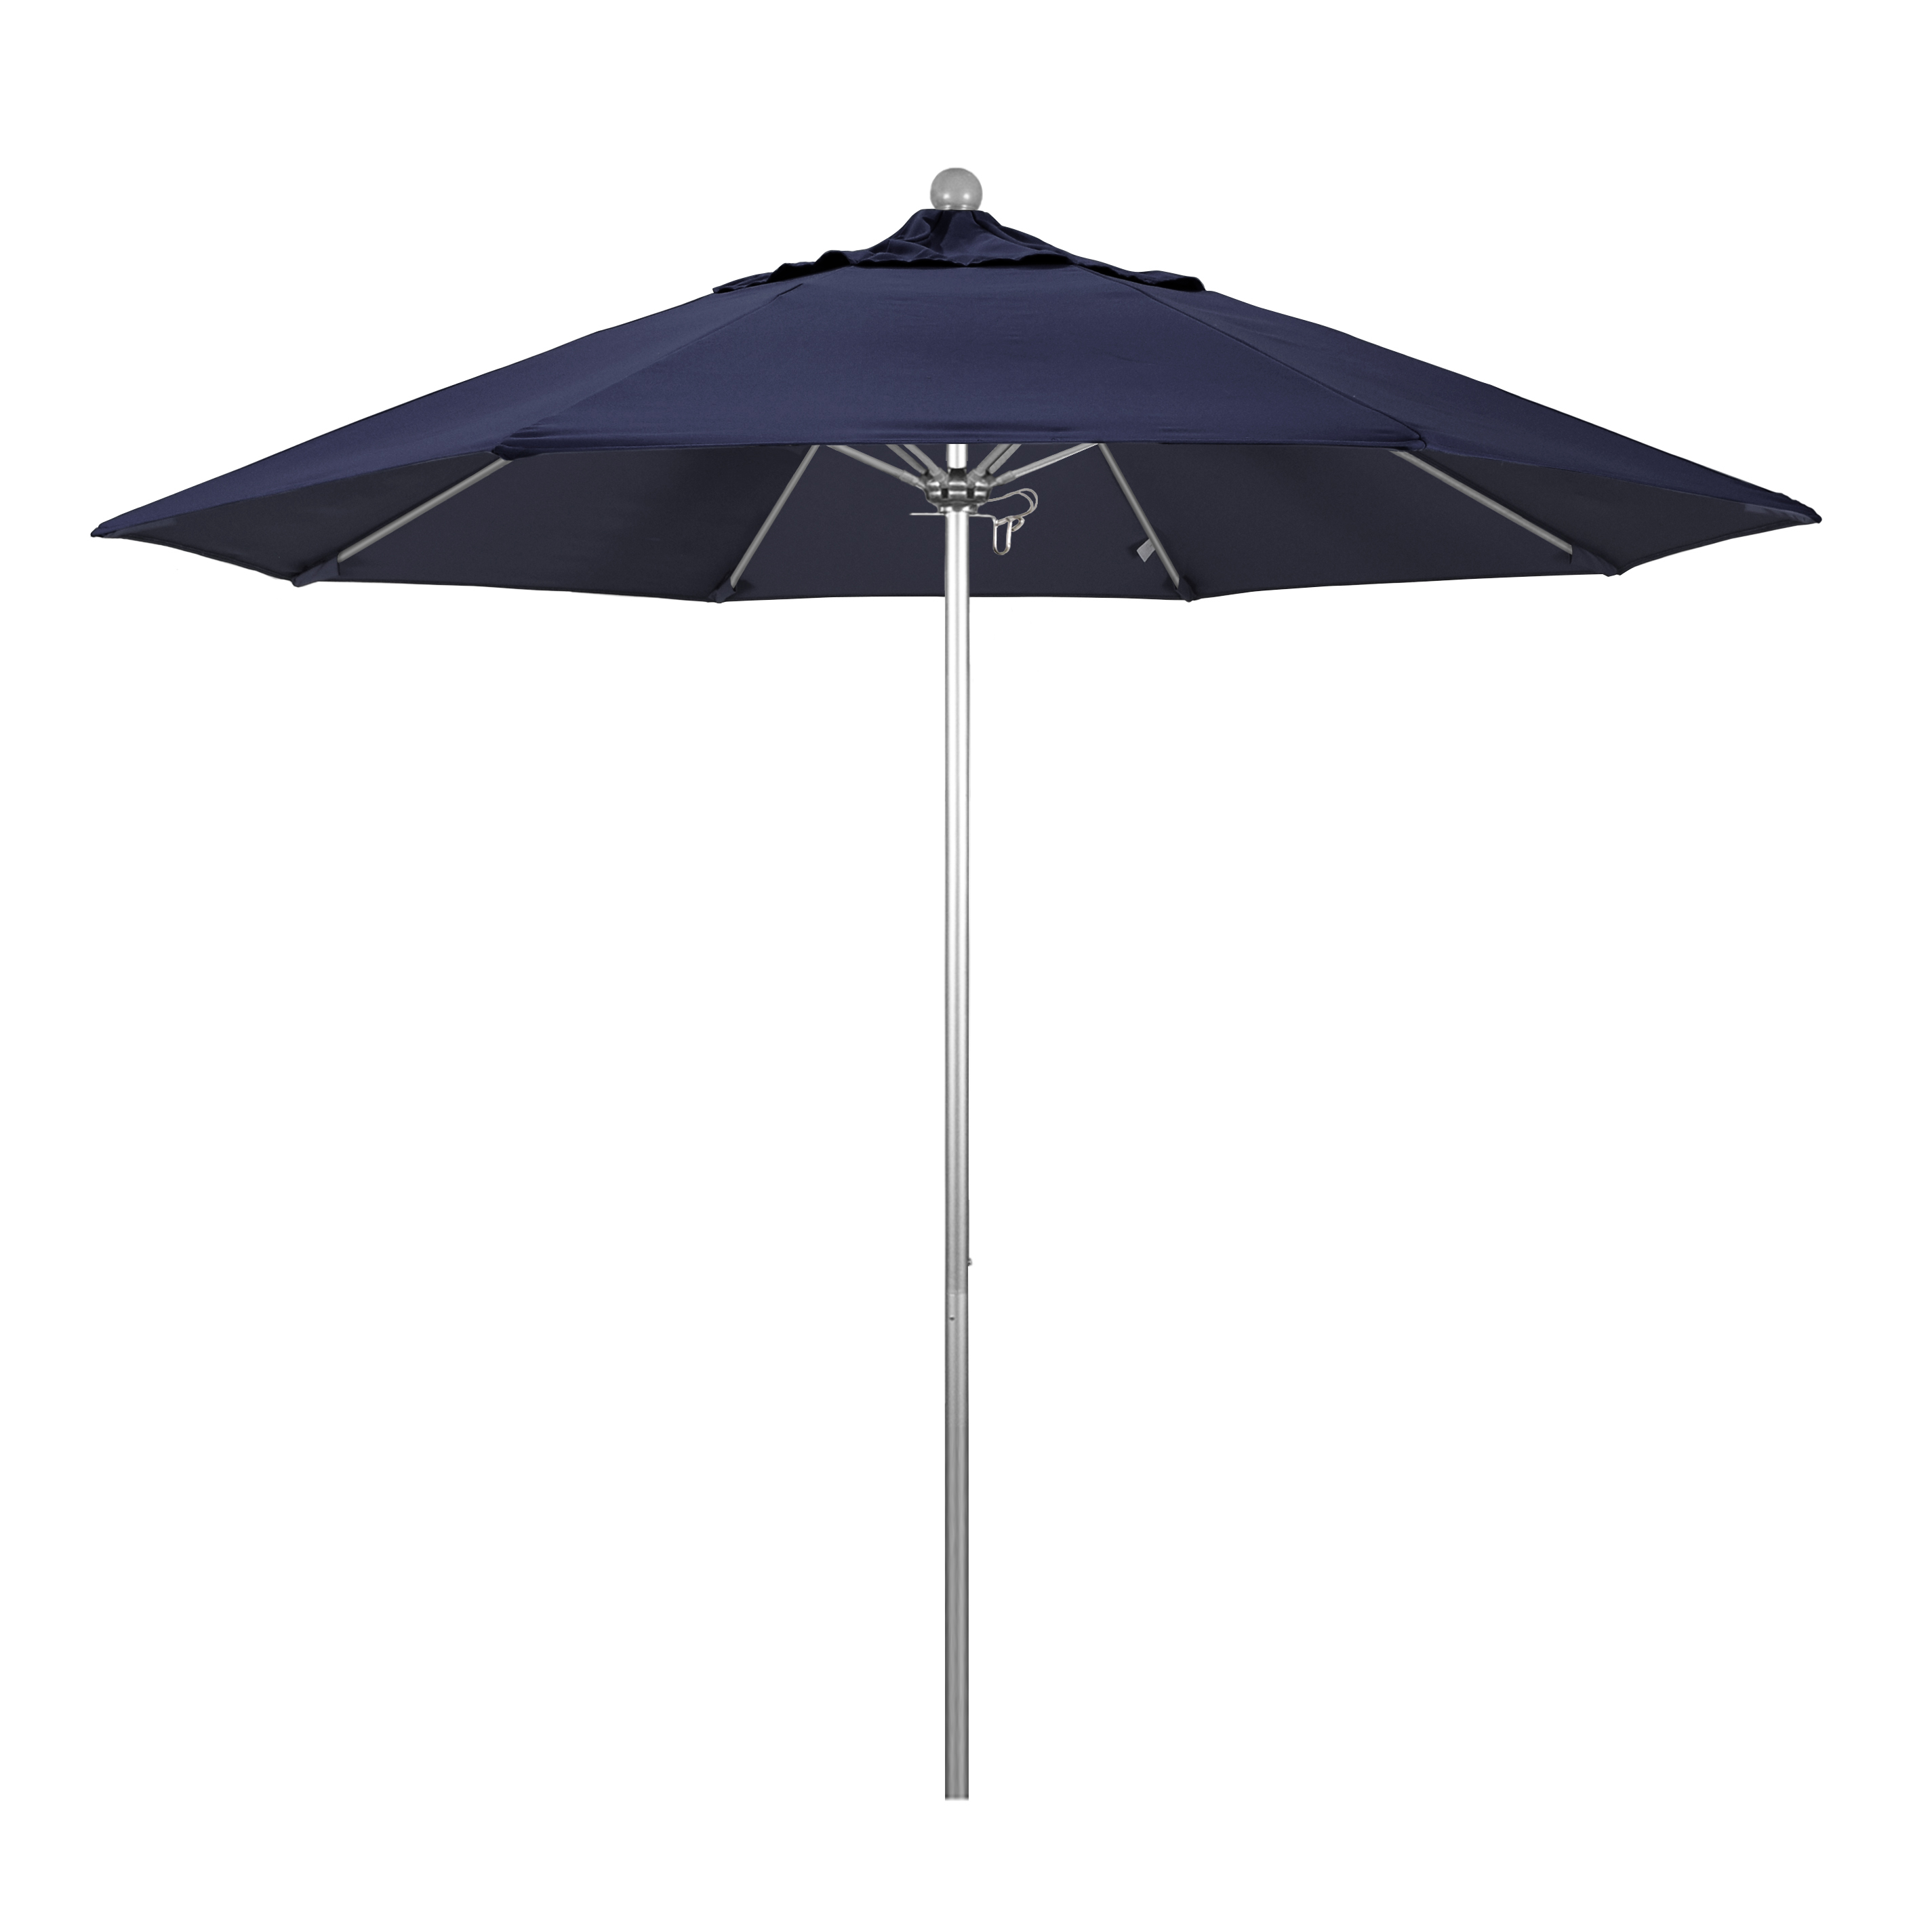 Alto908002-5439 9 Ft. Fiberglass Market Umbrella Pulley Open S Anodized-sunbrella-navy